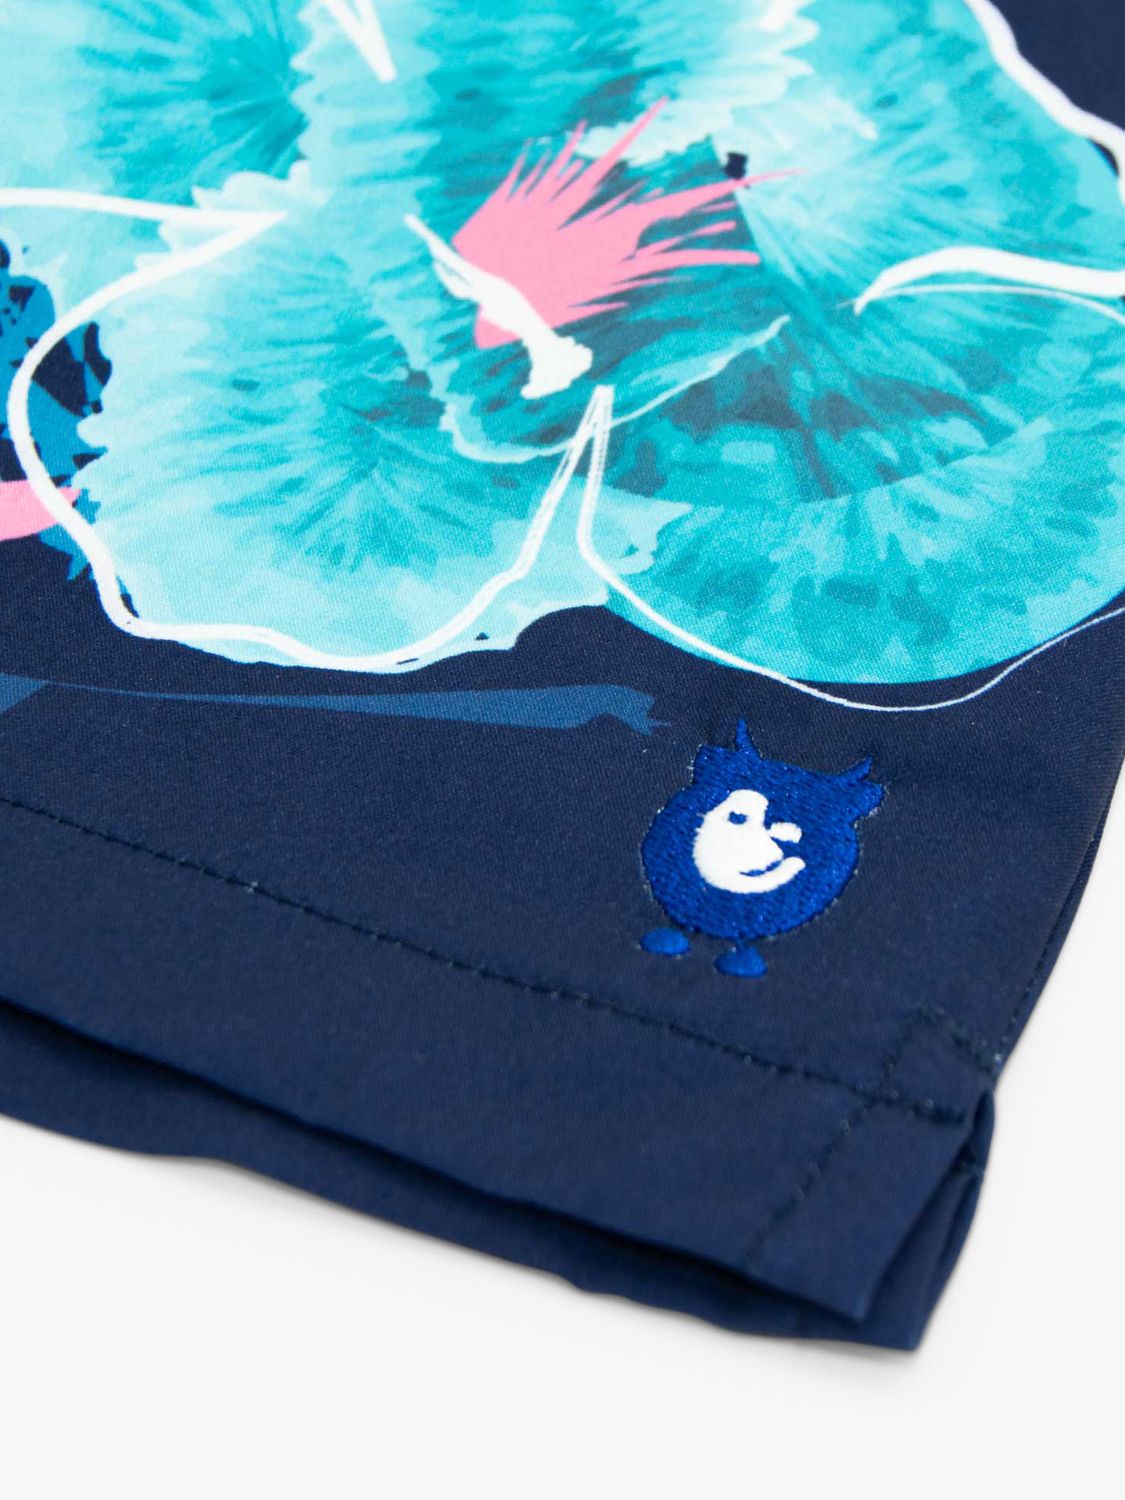 Randy Cow Floral Print Swim Shorts with Waterproof Pocket, Navy/Multi, XL